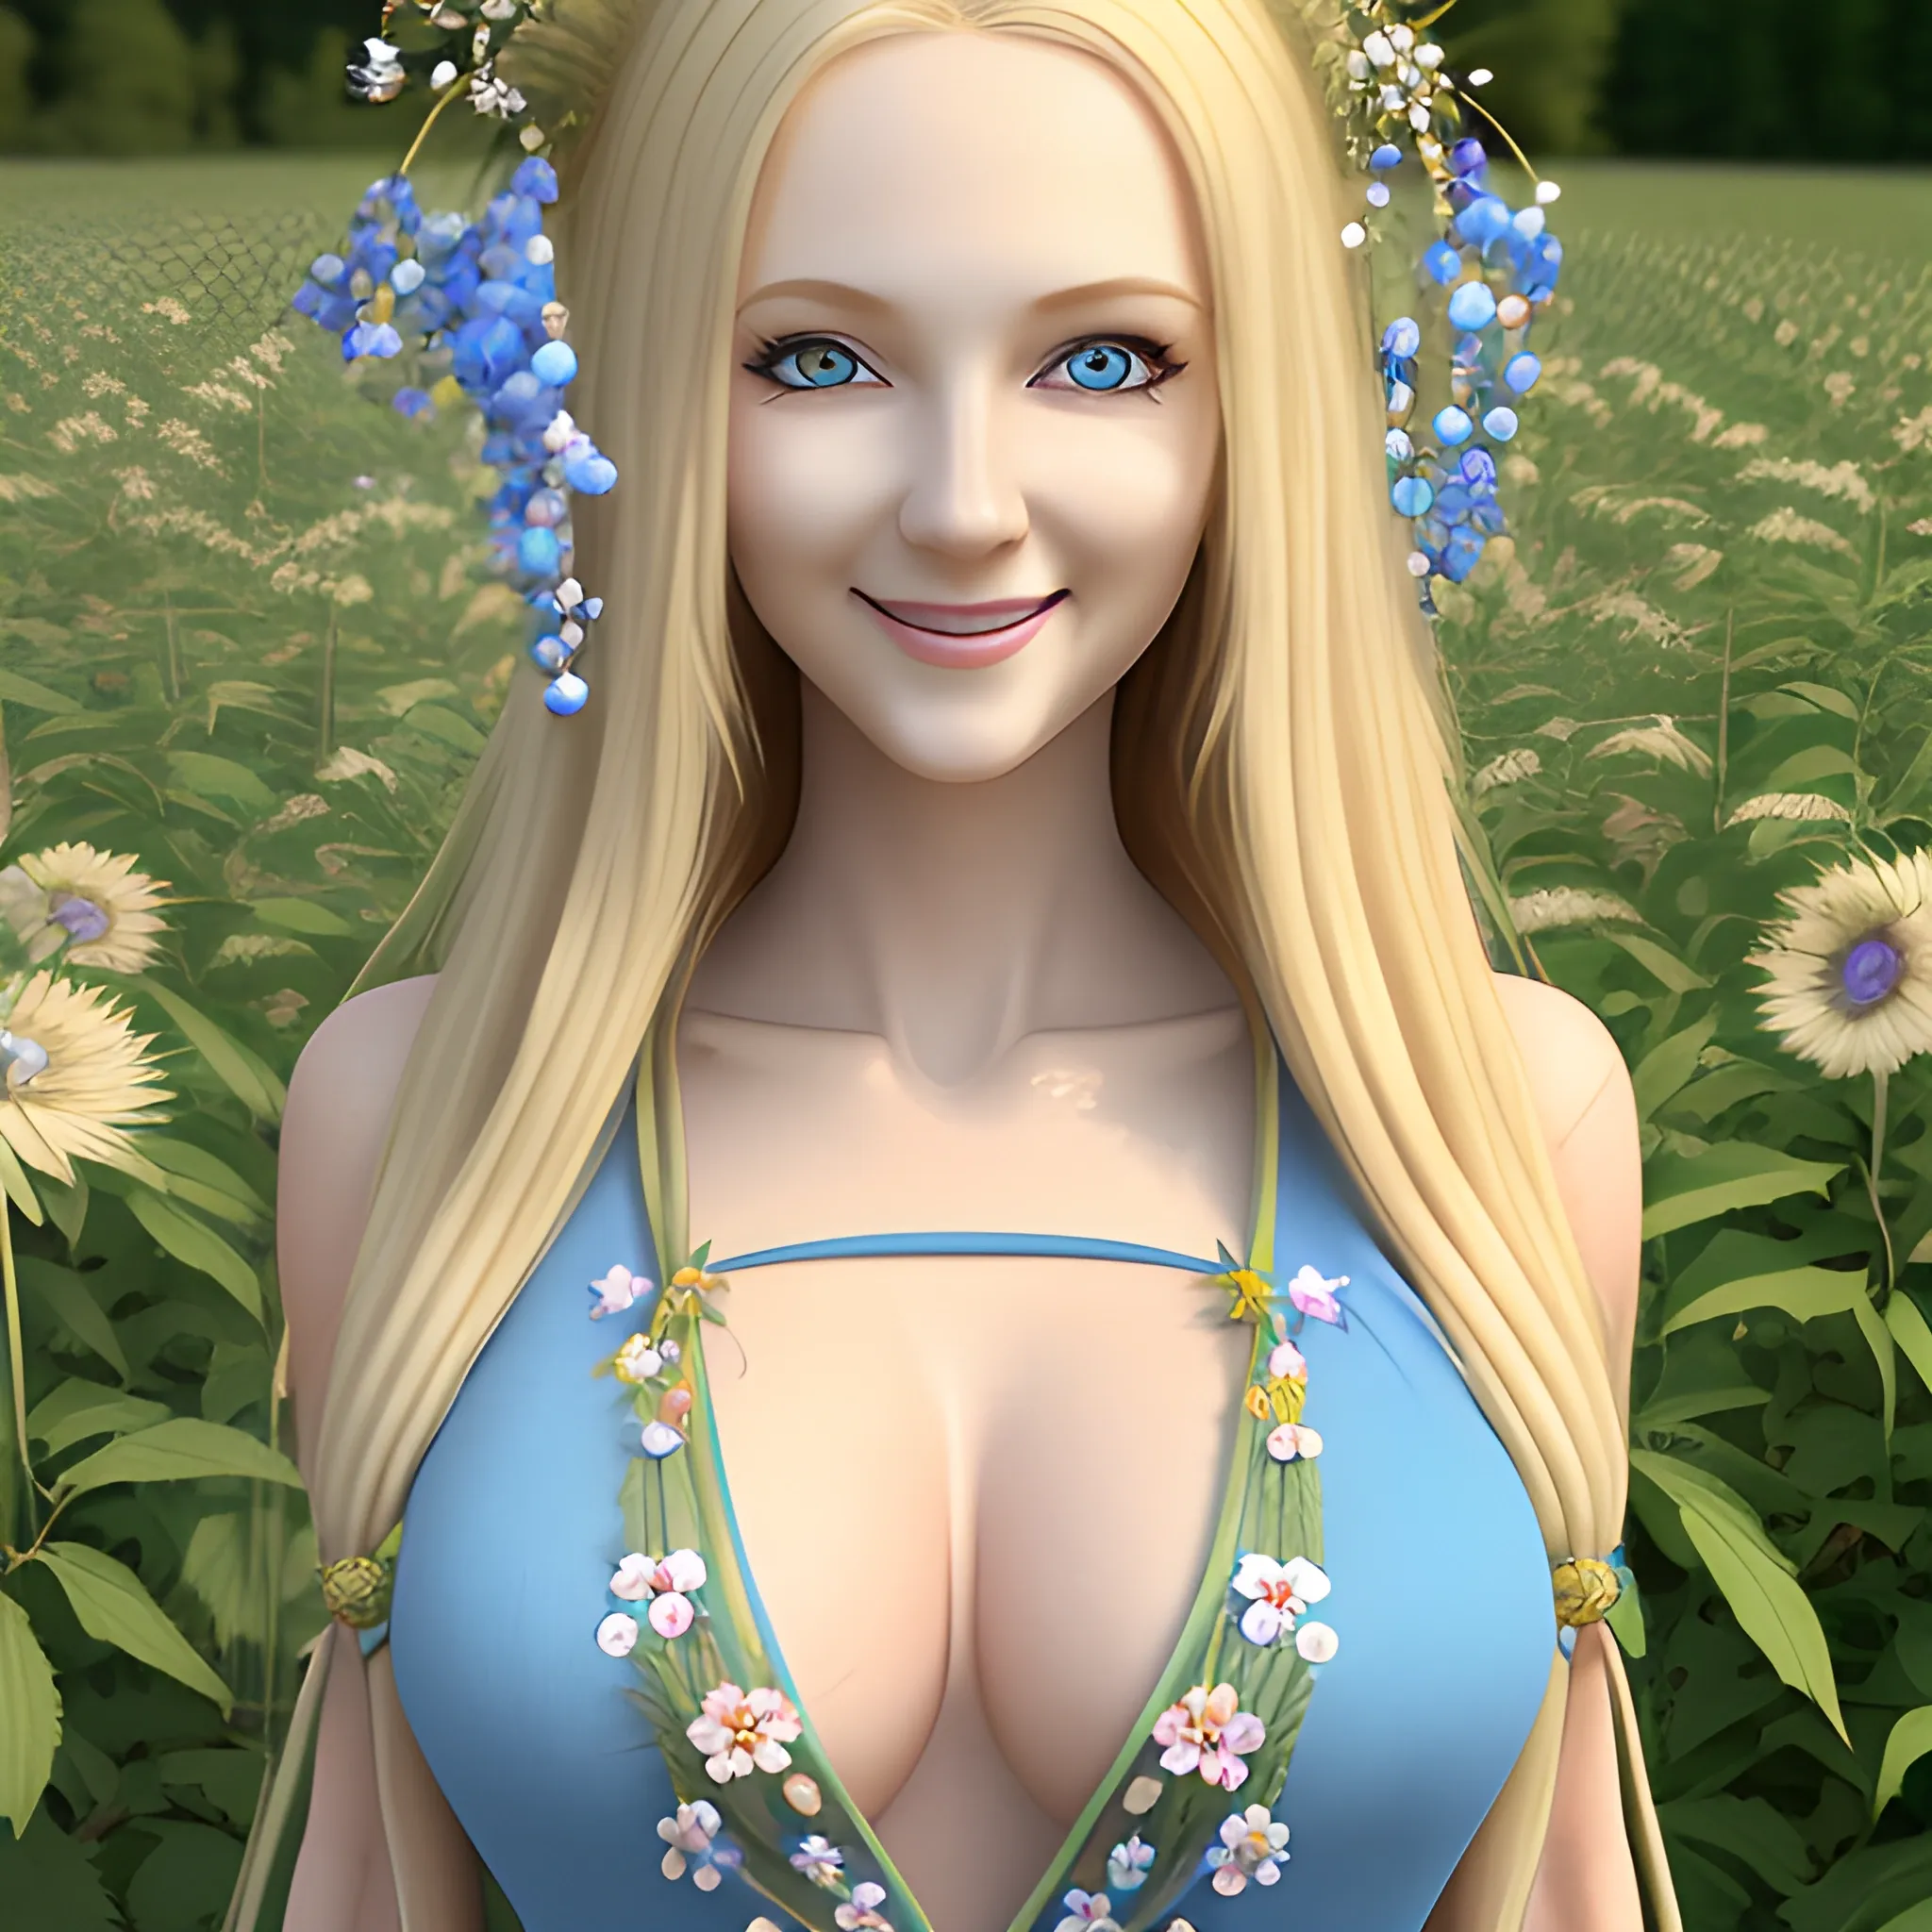 Woman Long Blonde Hair Blue Eys 3d Smile With Closed Lips Arthubai